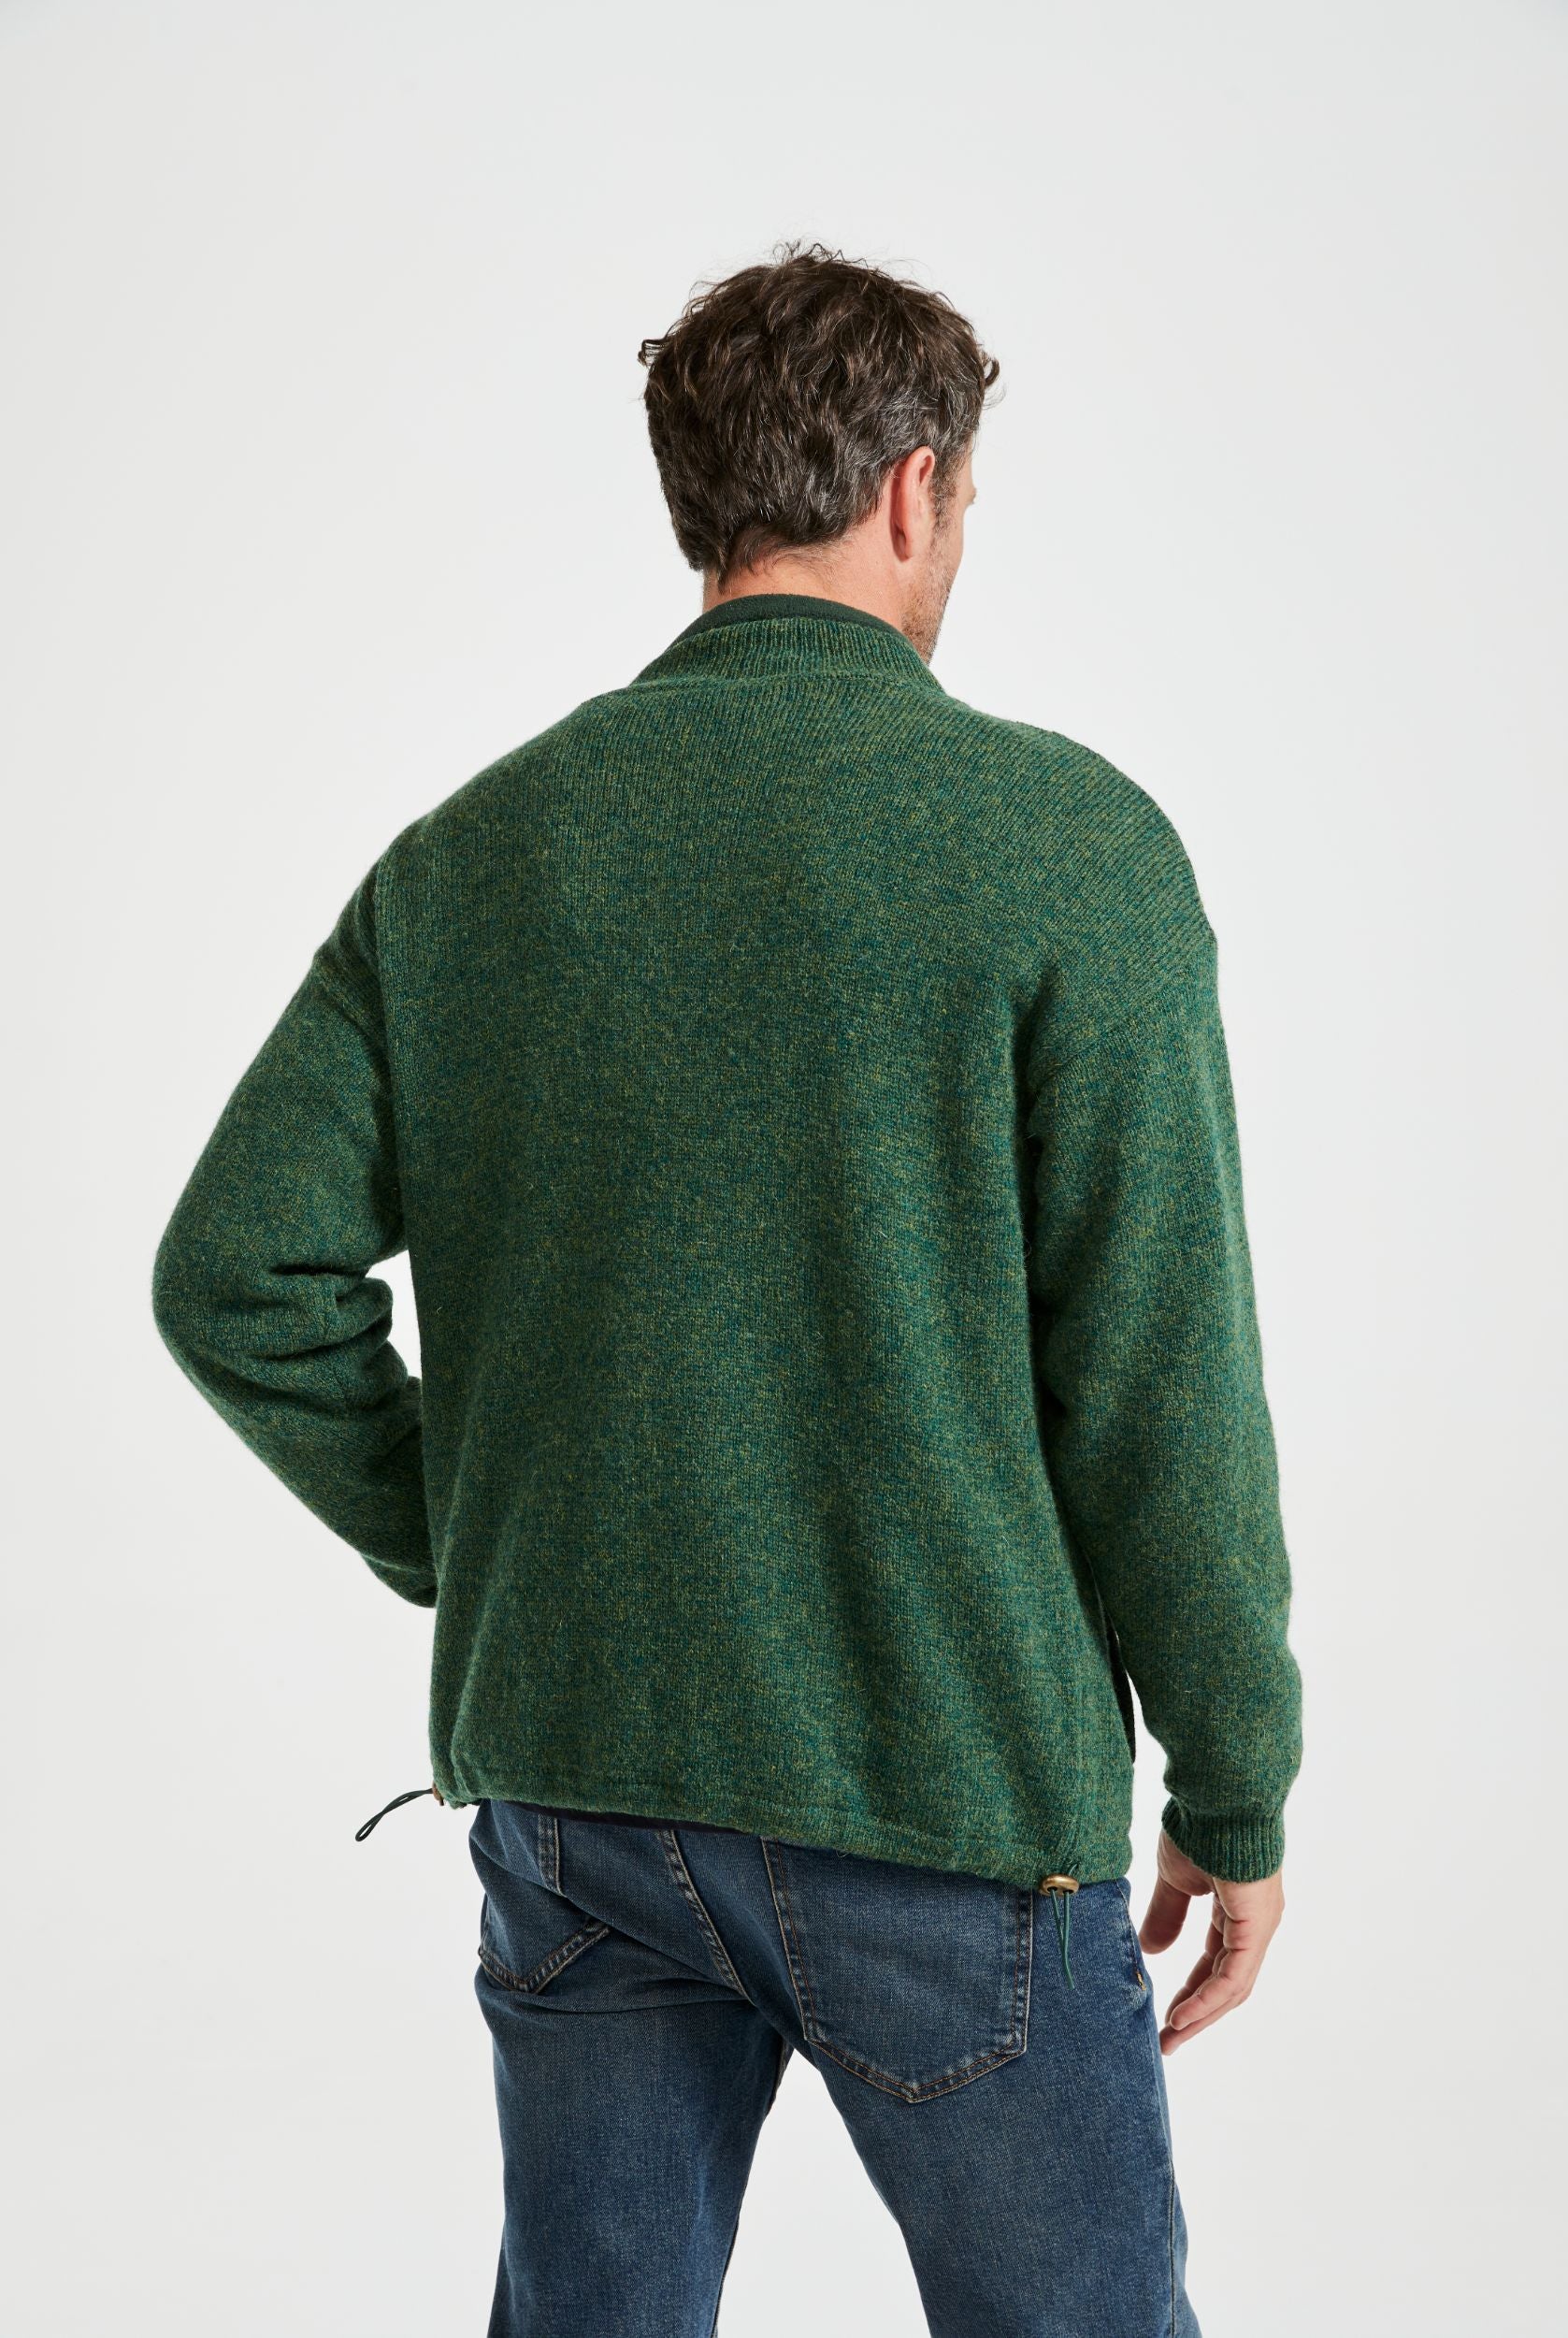 Farmleigh Lined Wool Mens Cardigan - Green – Ciara's Irish Shop